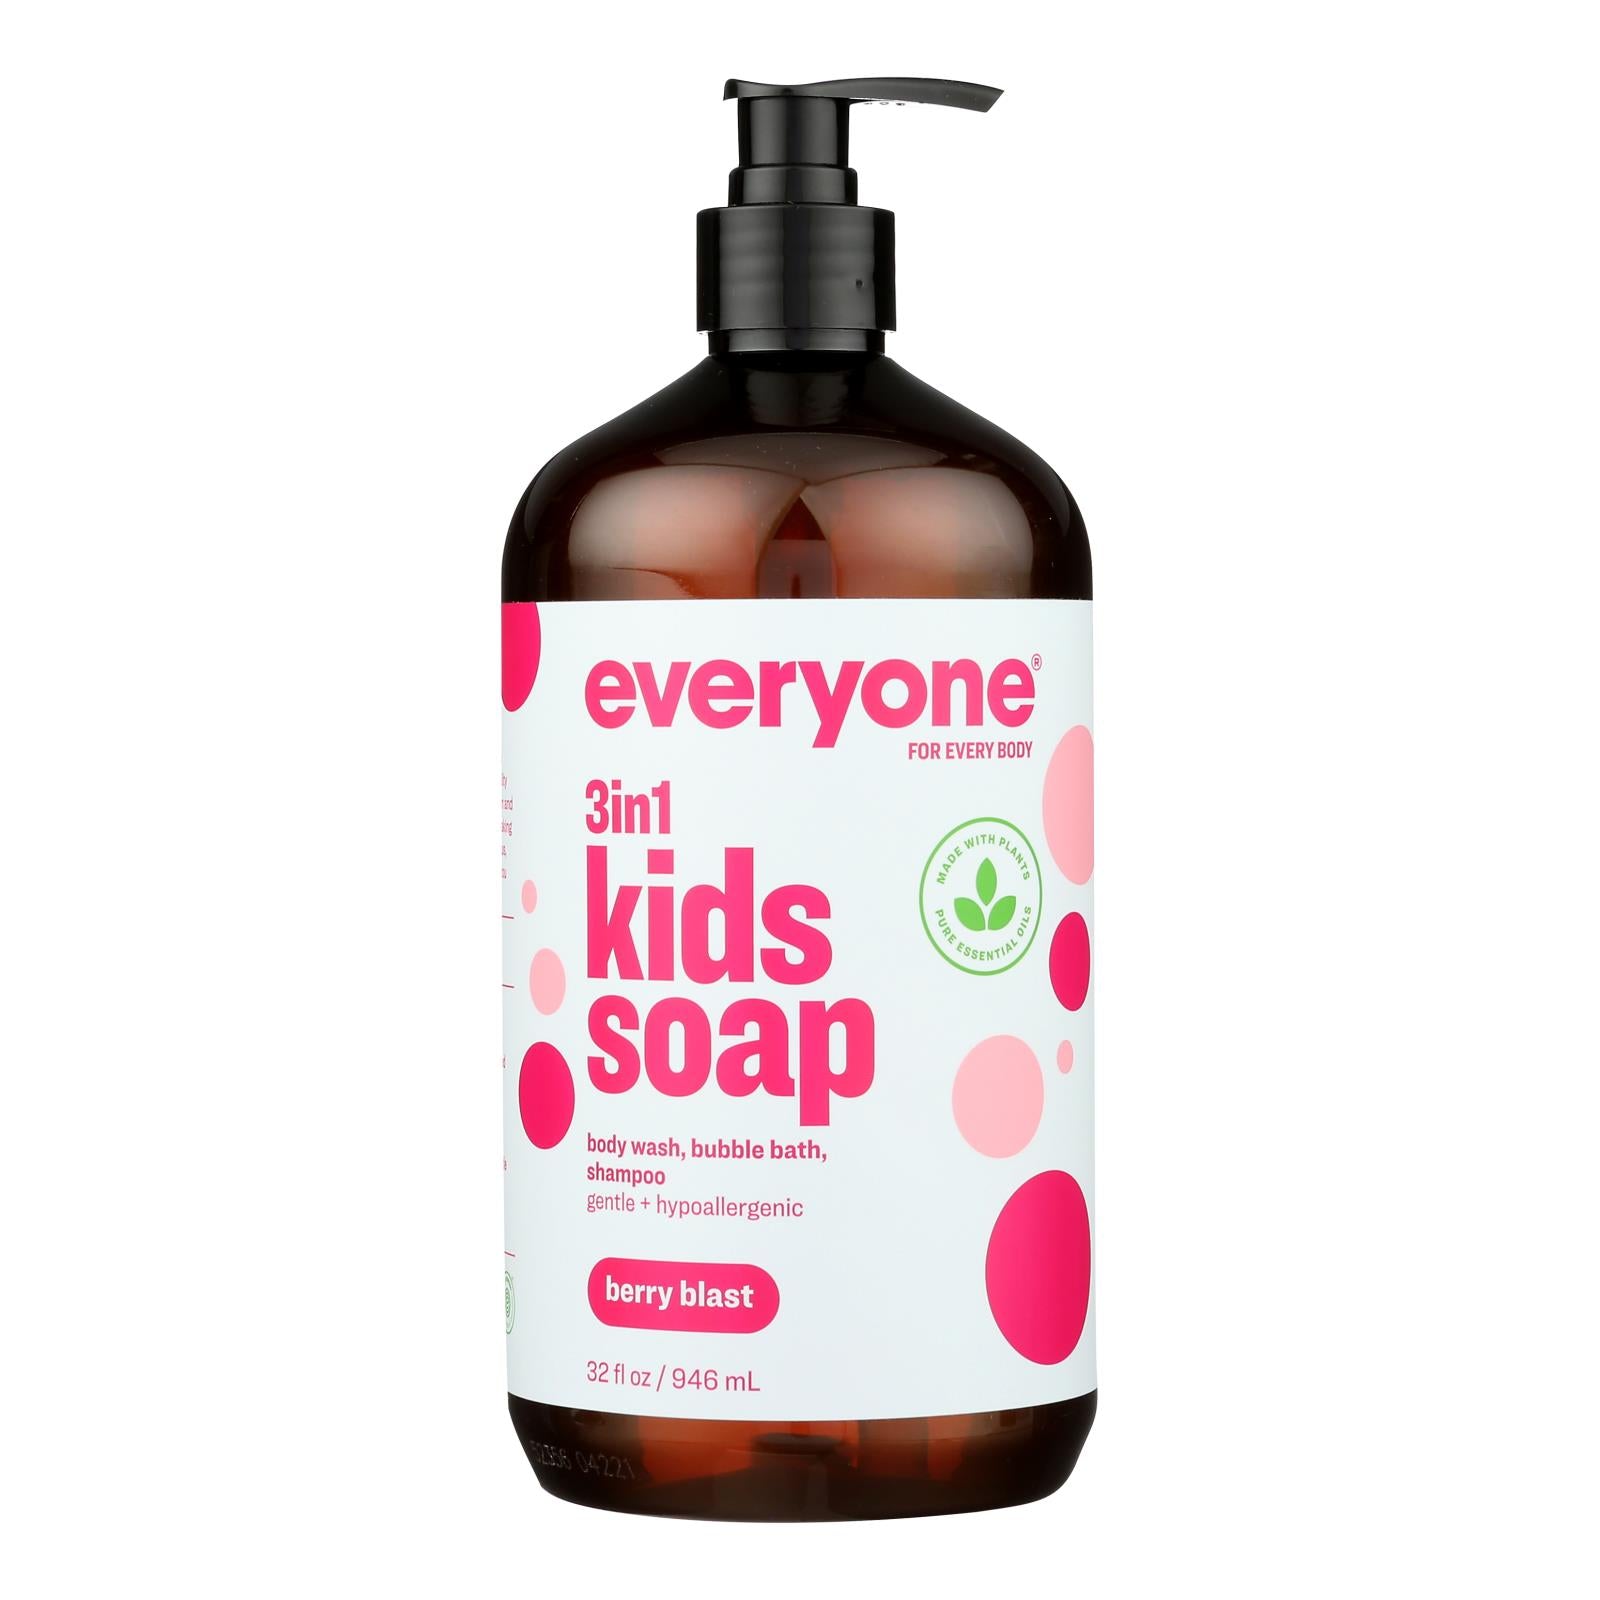 Everyone - Soap 3 In 1 Kds Berry Blast - 32 Fz